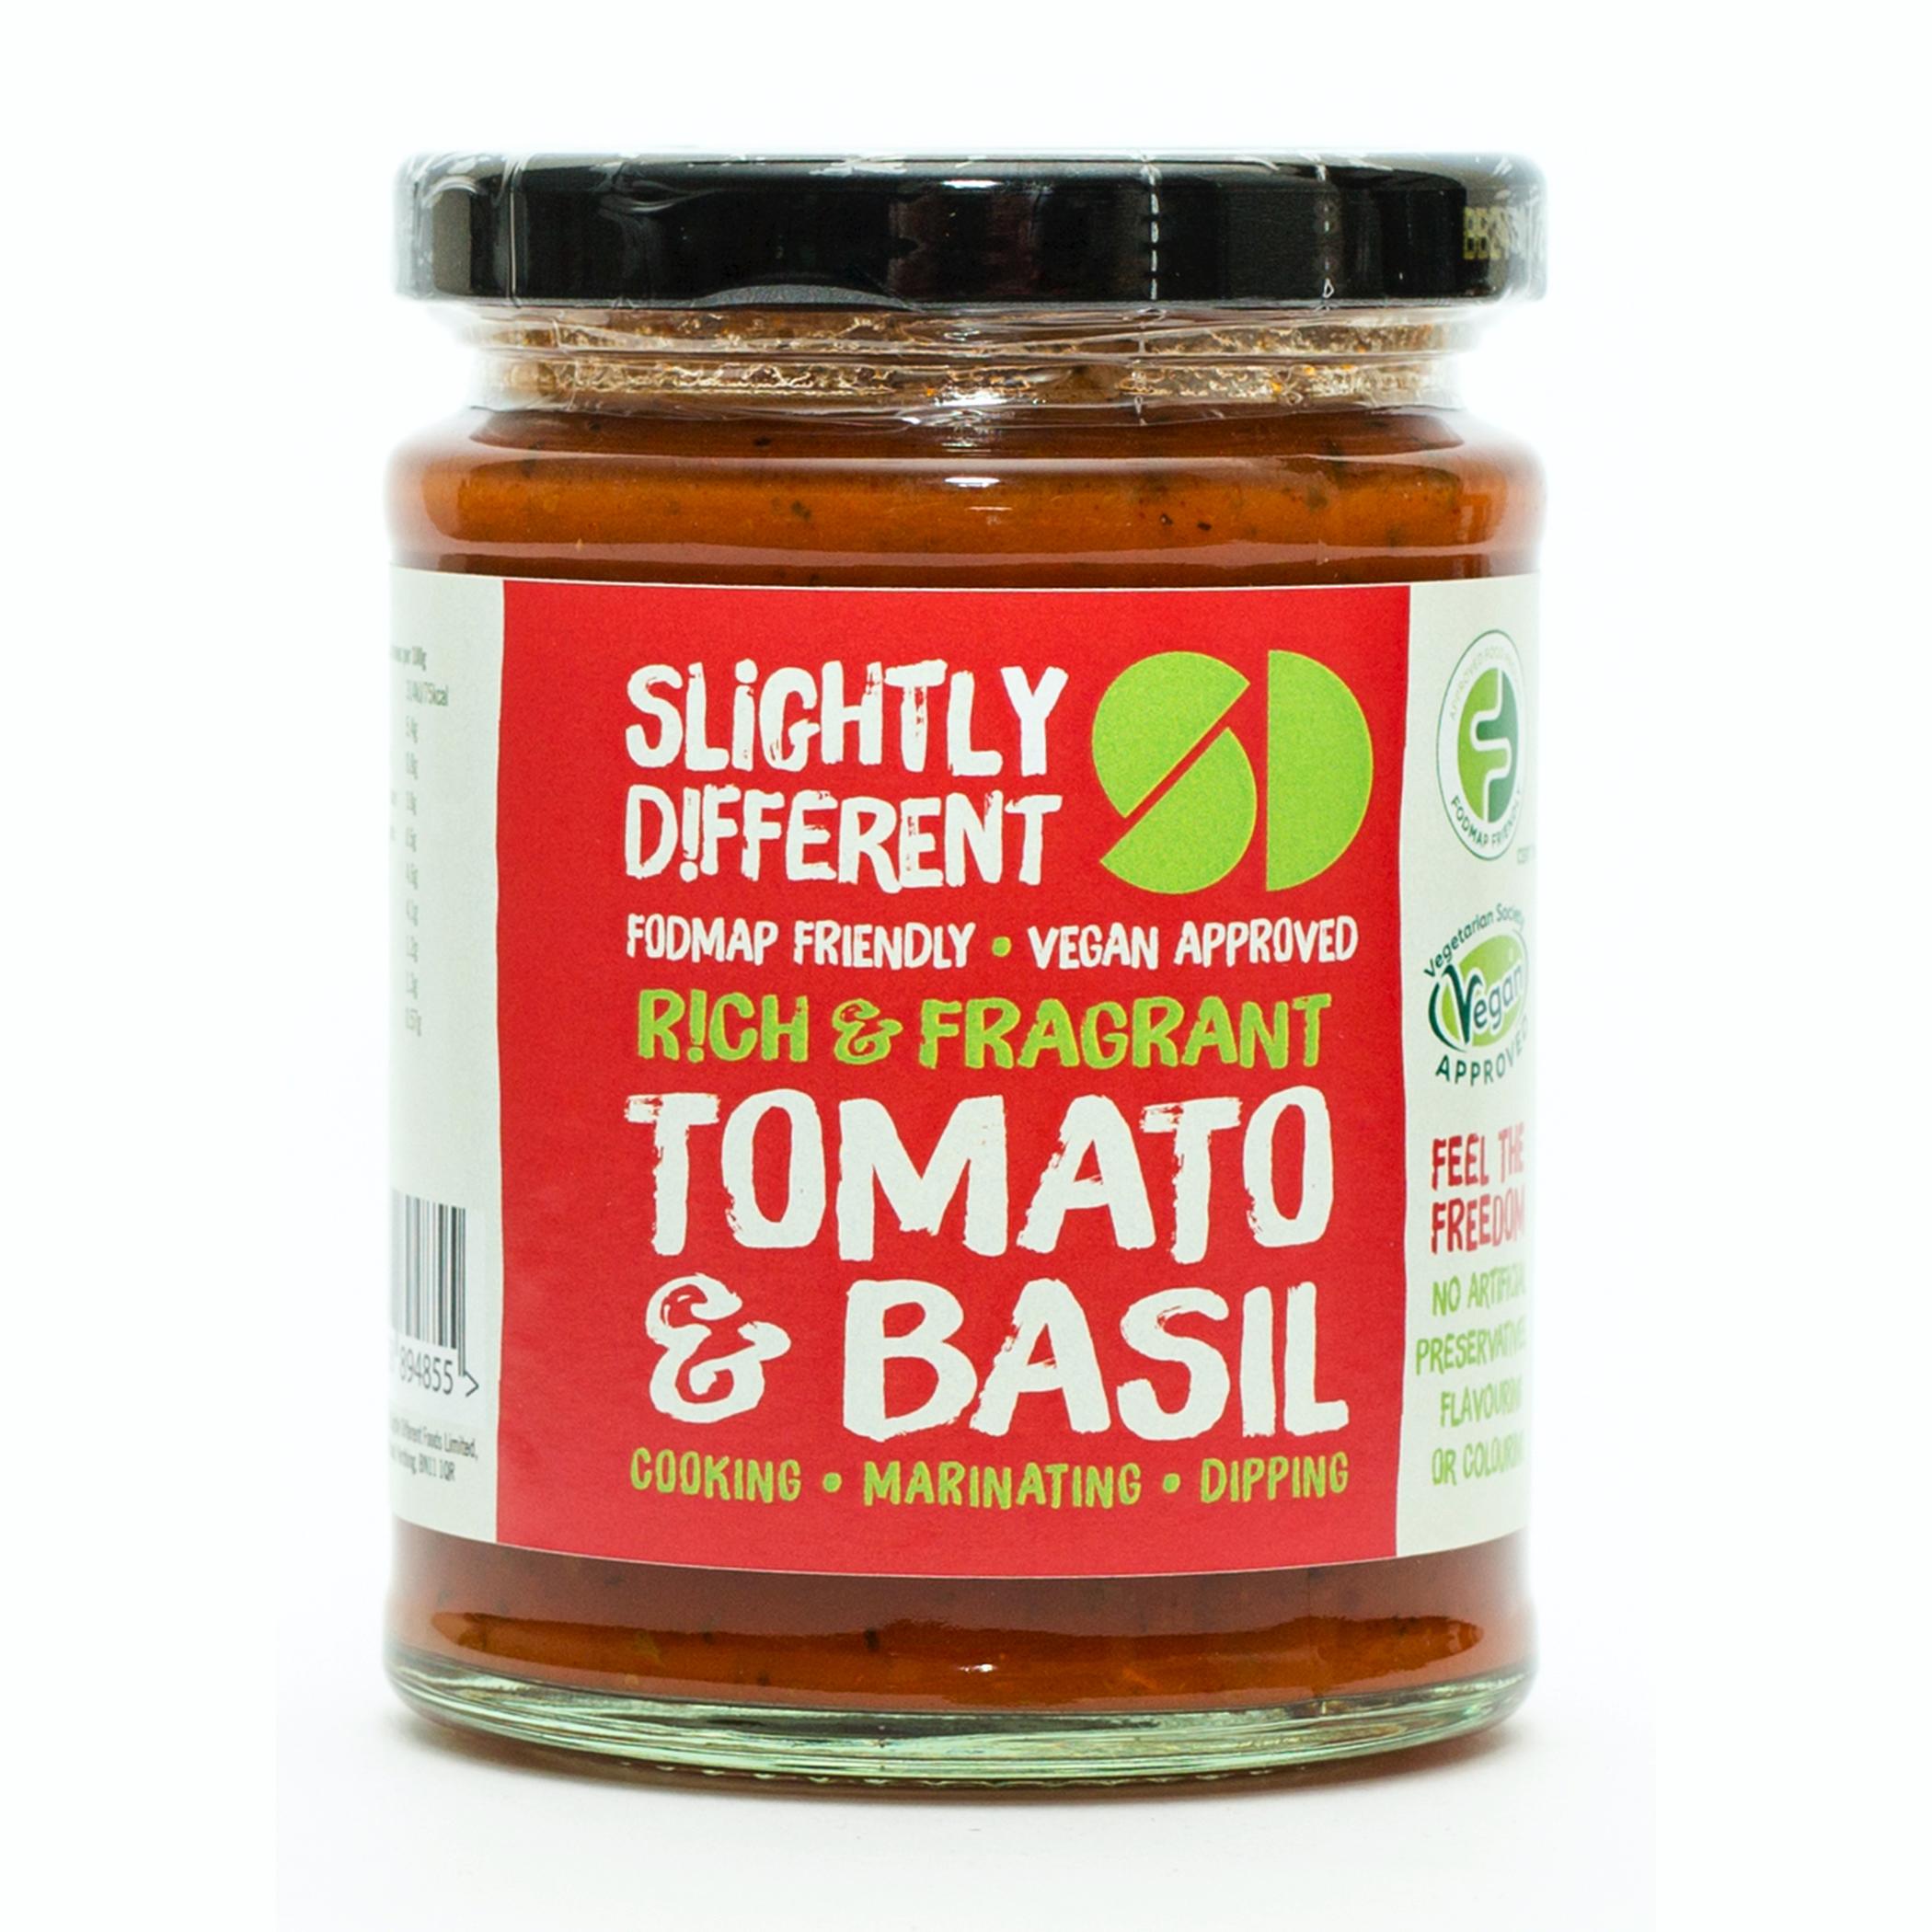 A jar of Slightly Different's Tomato & Basil Sauce